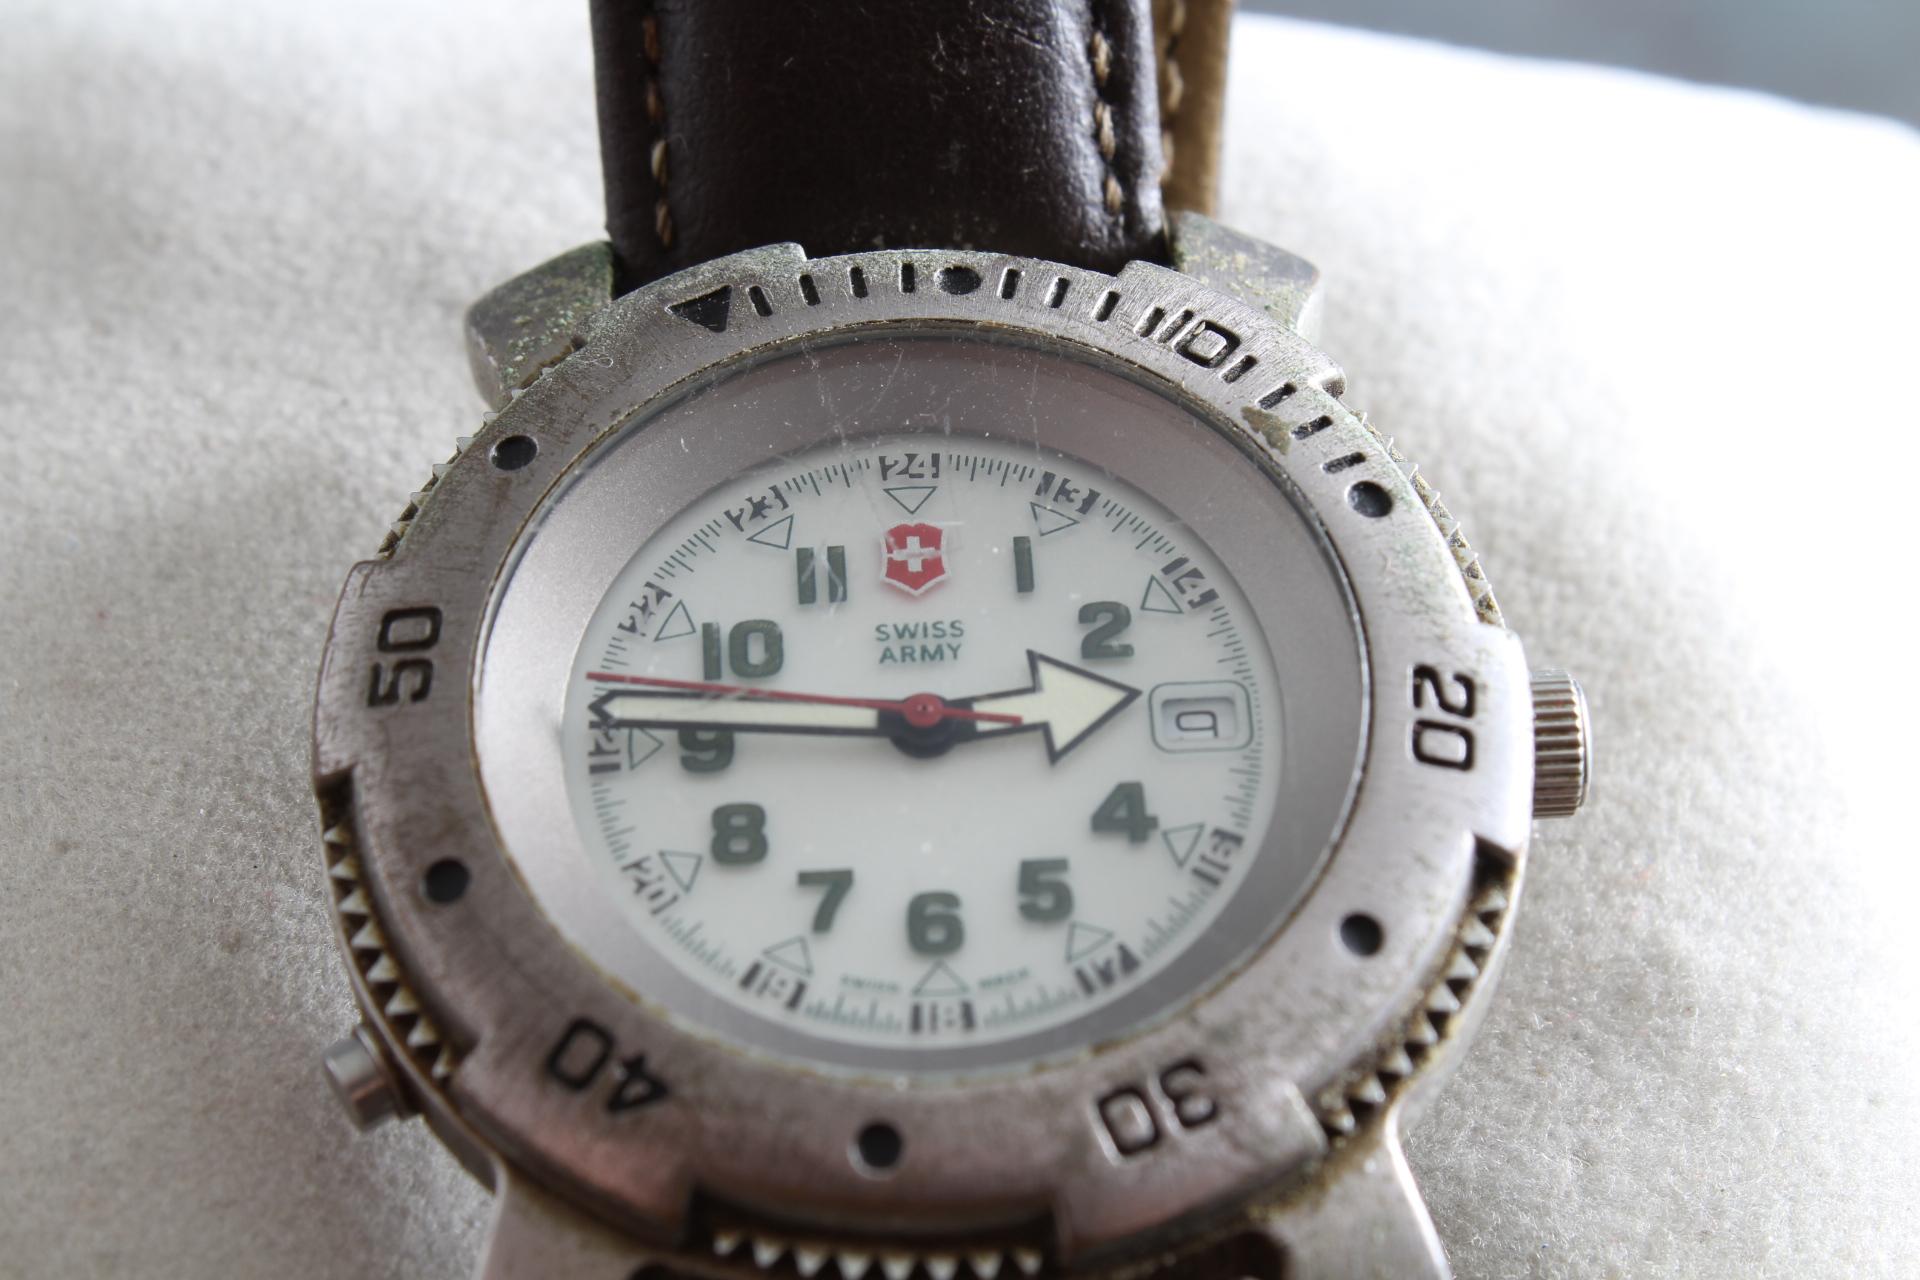 Swiss Army Working Wrist Watch with Leather Band